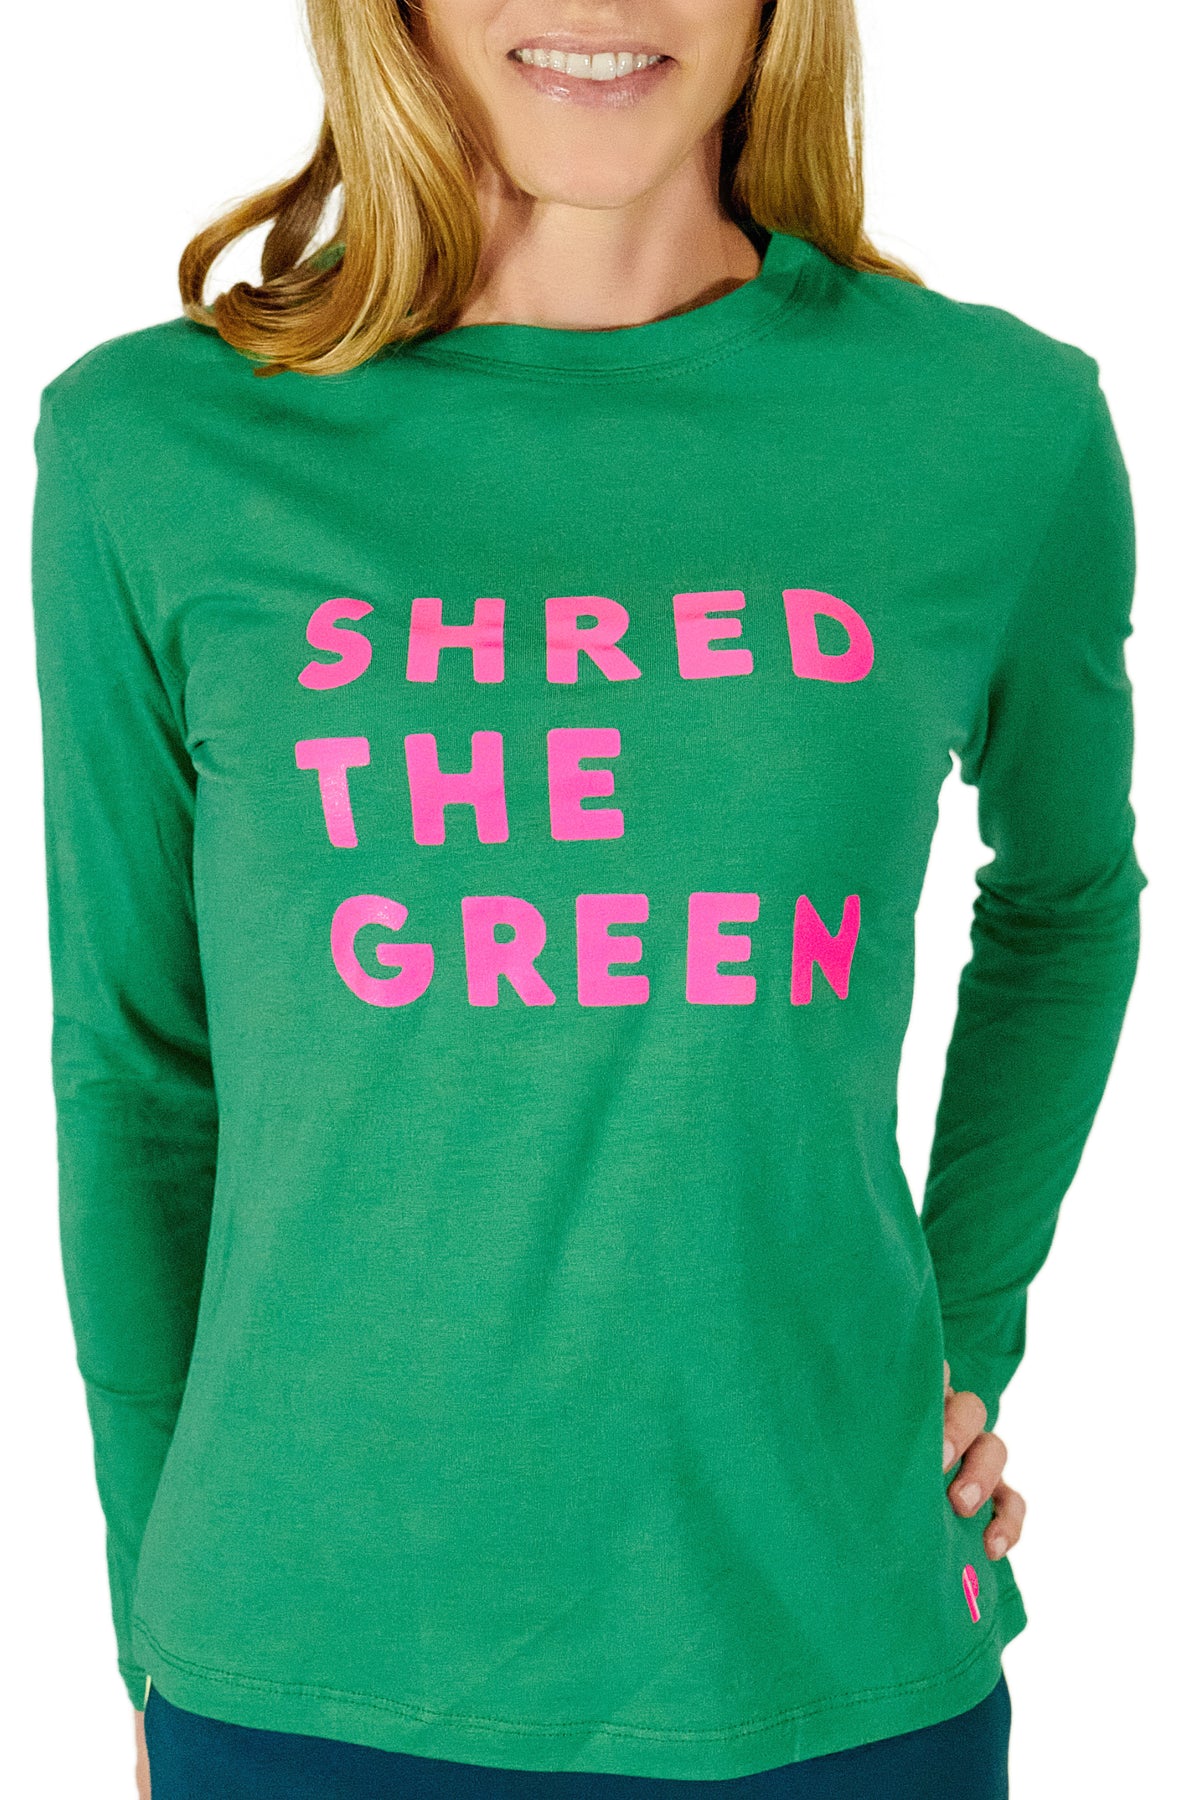 Shred the Green Long-Sleeve Tee